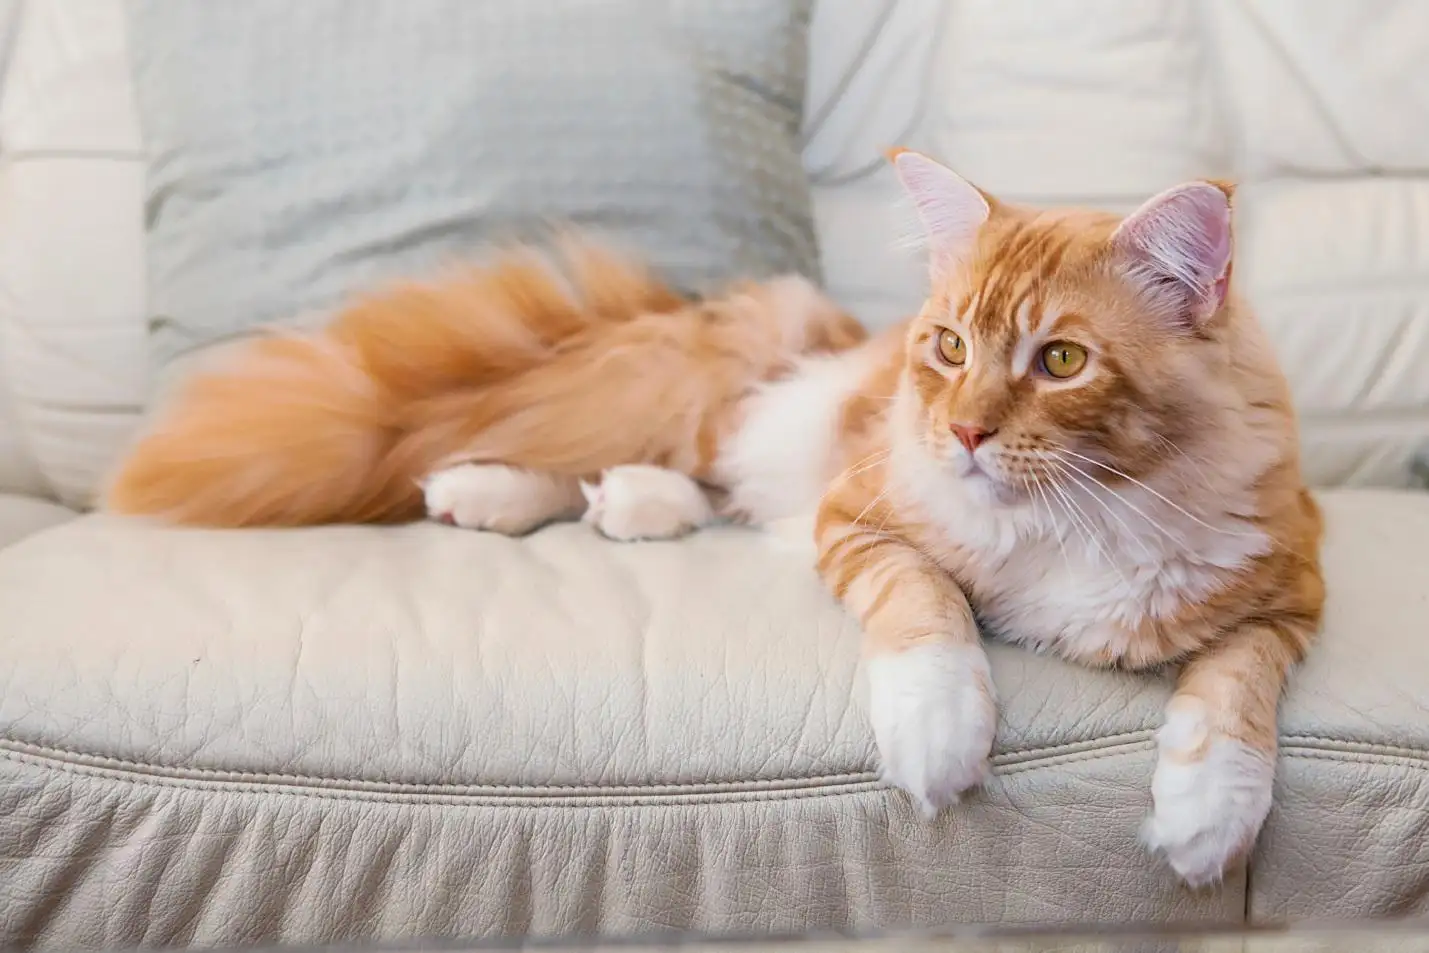 Pet-friendly couches